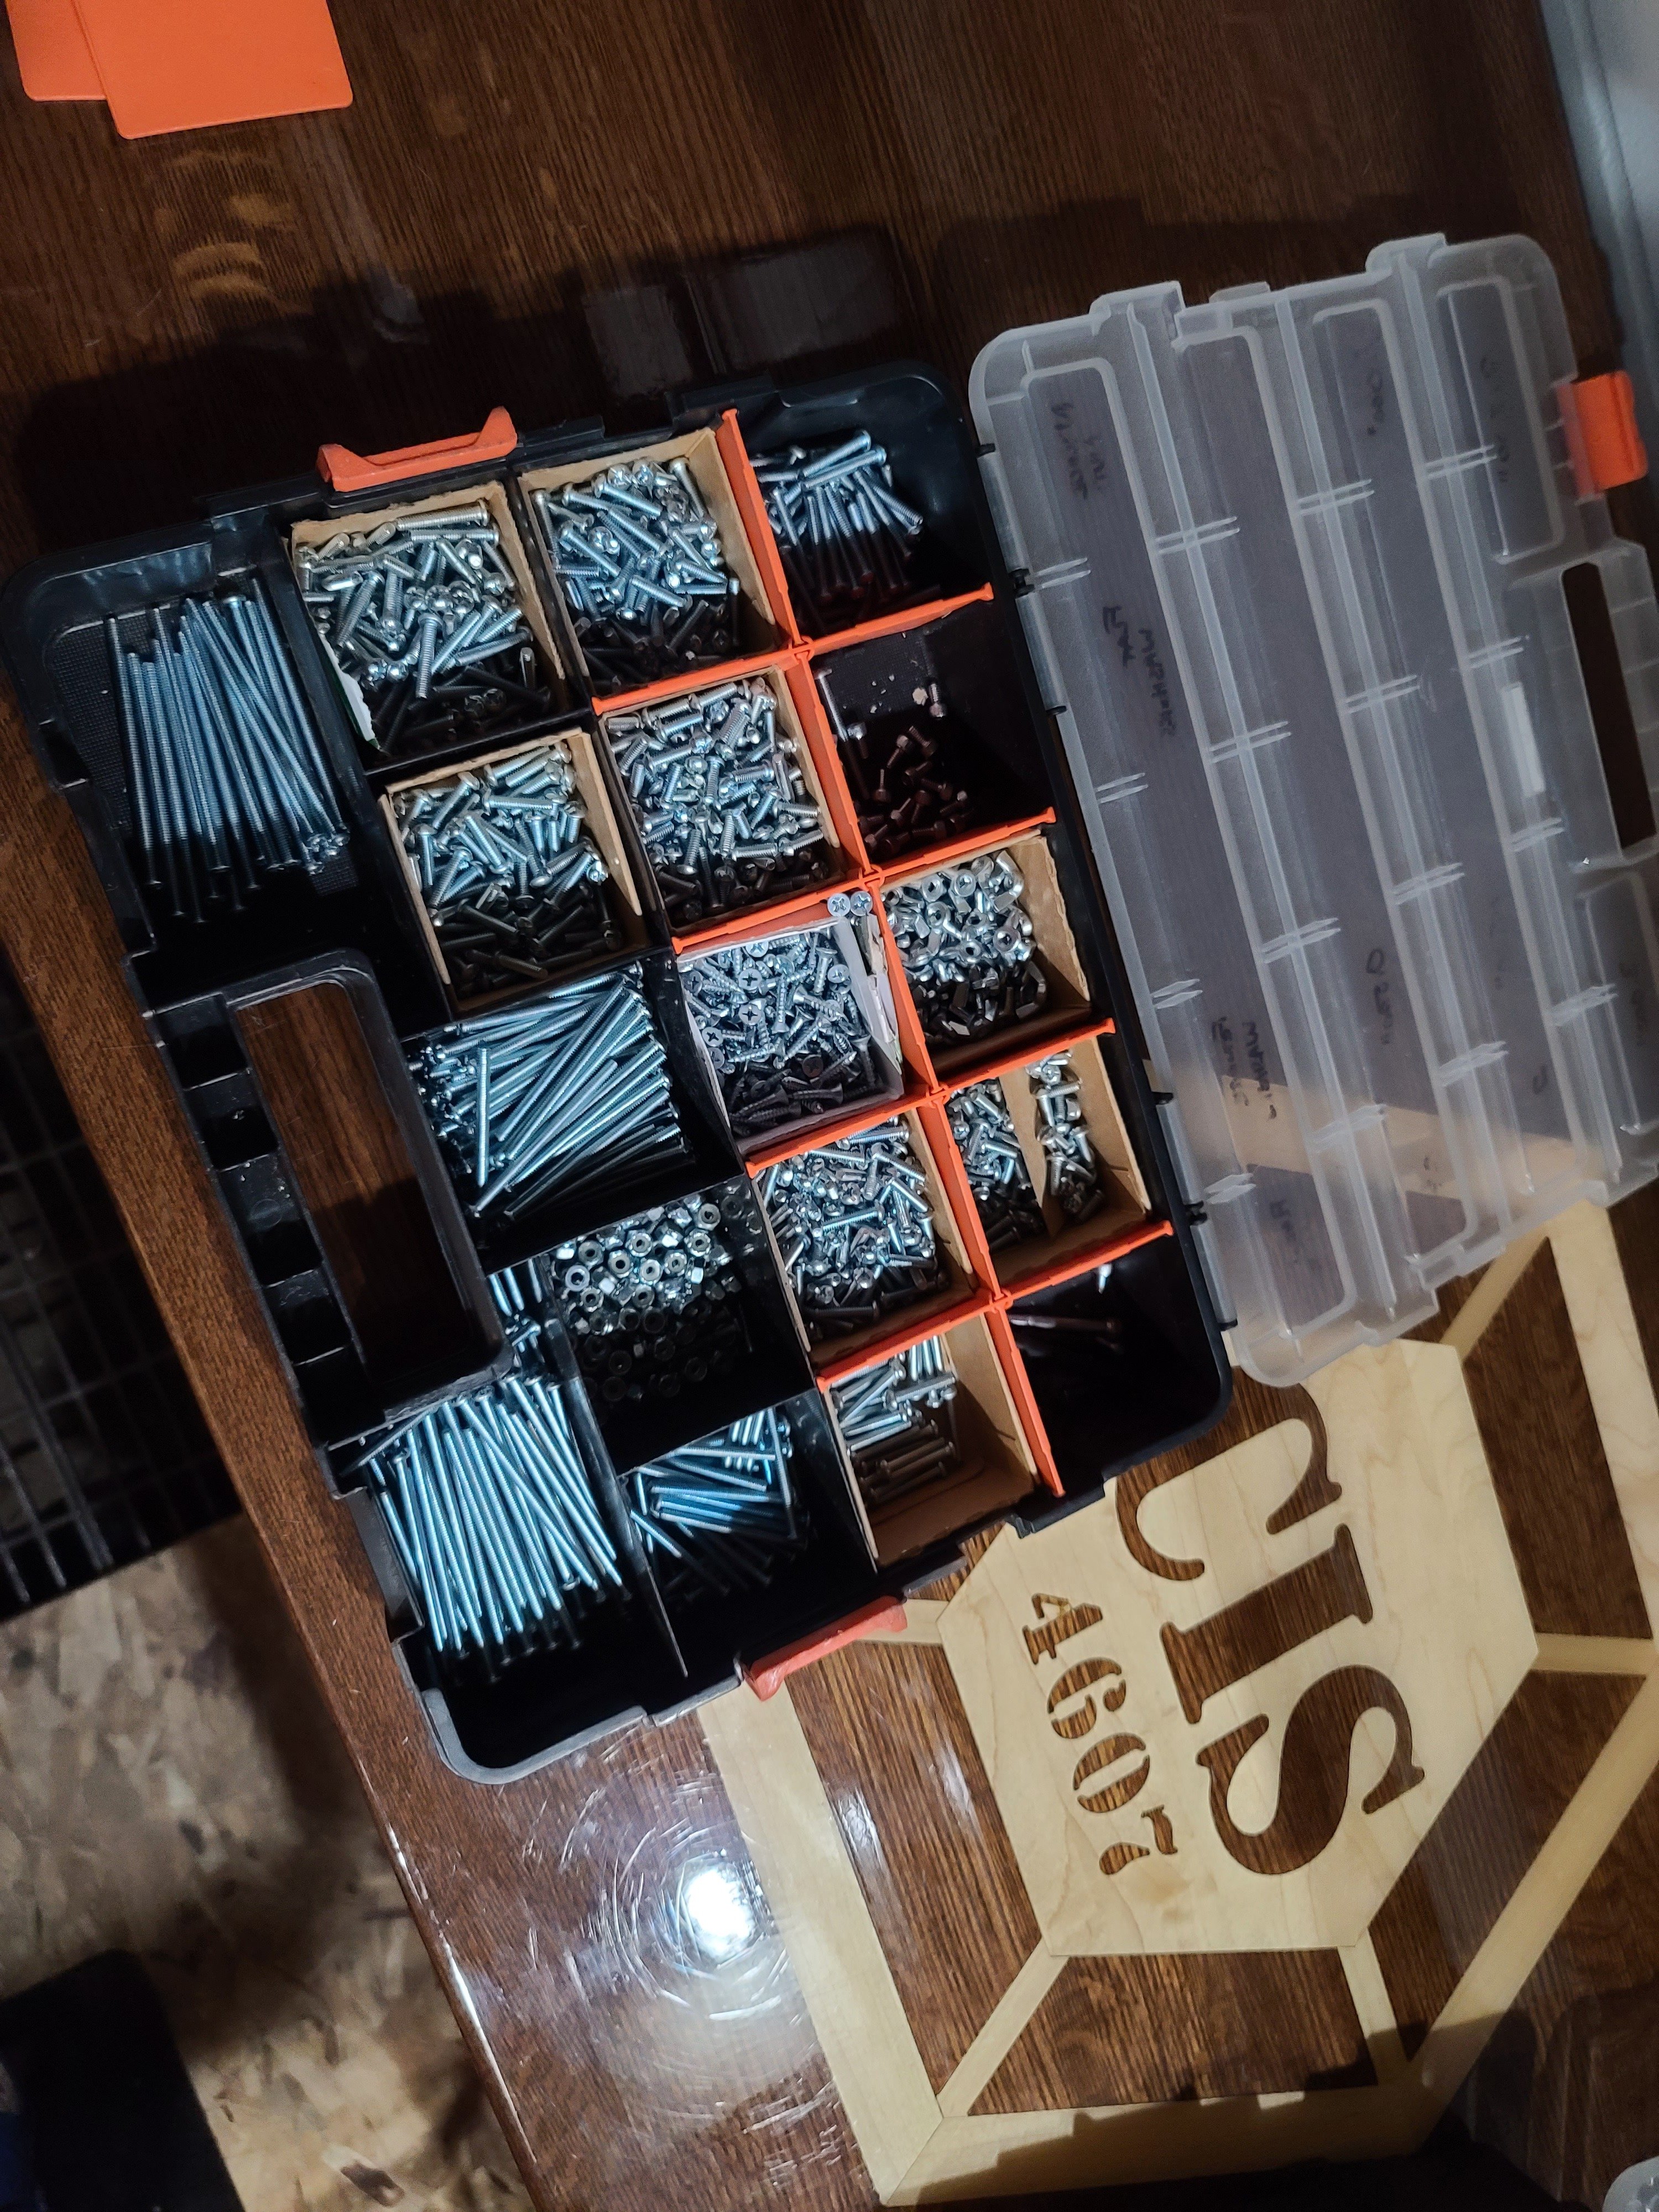 Husky 10-Compartment Interlocking Small Parts Organizer in Black 235587 -  The Home Depot